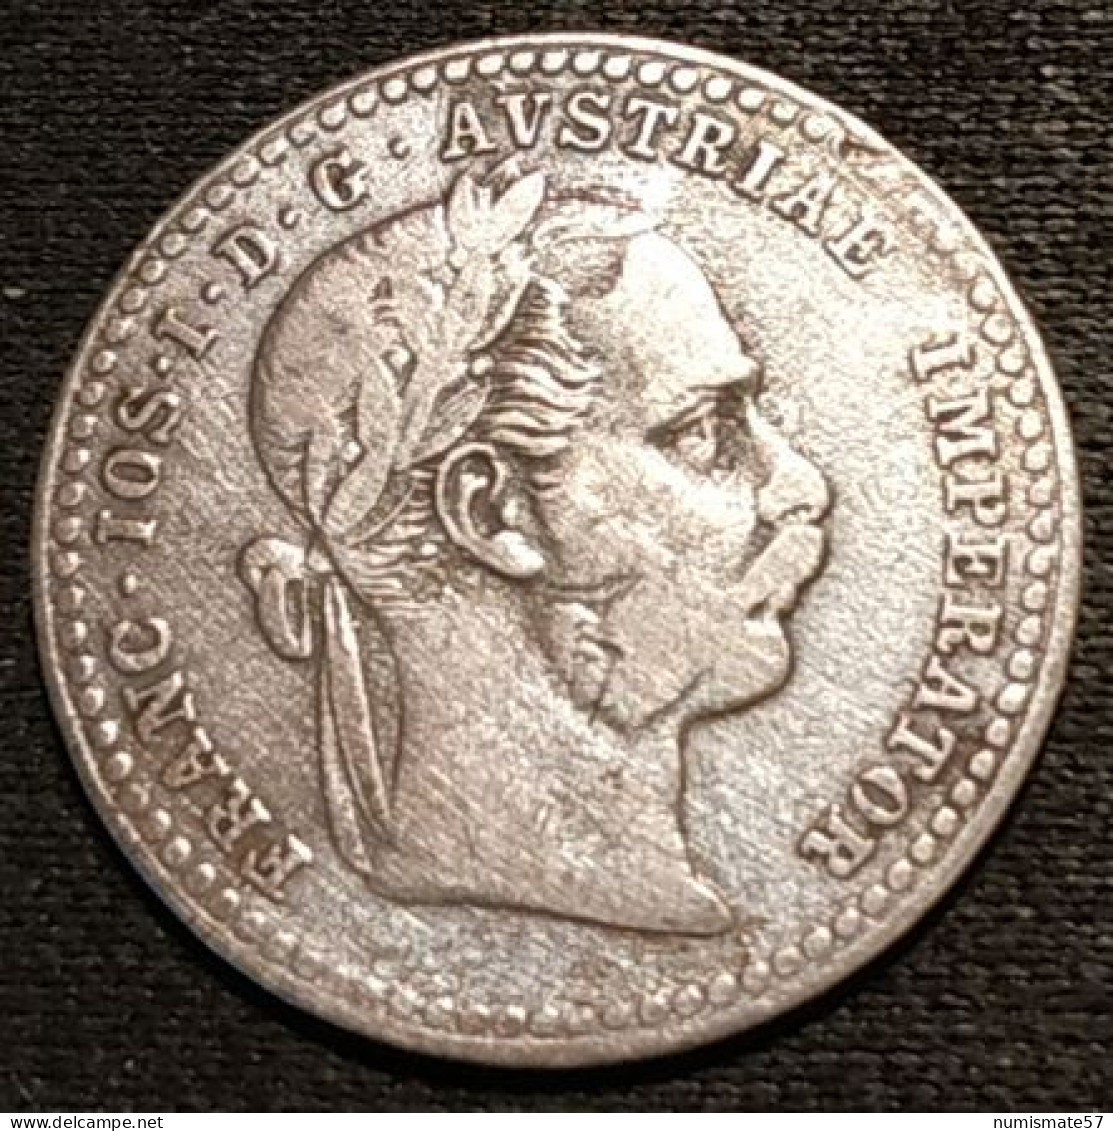 AUTRICHE - AUSTRIA - 10 KREUZER 1870 - Argent - Silver - Franz Joseph I - KM 2206 - Oostenrijk